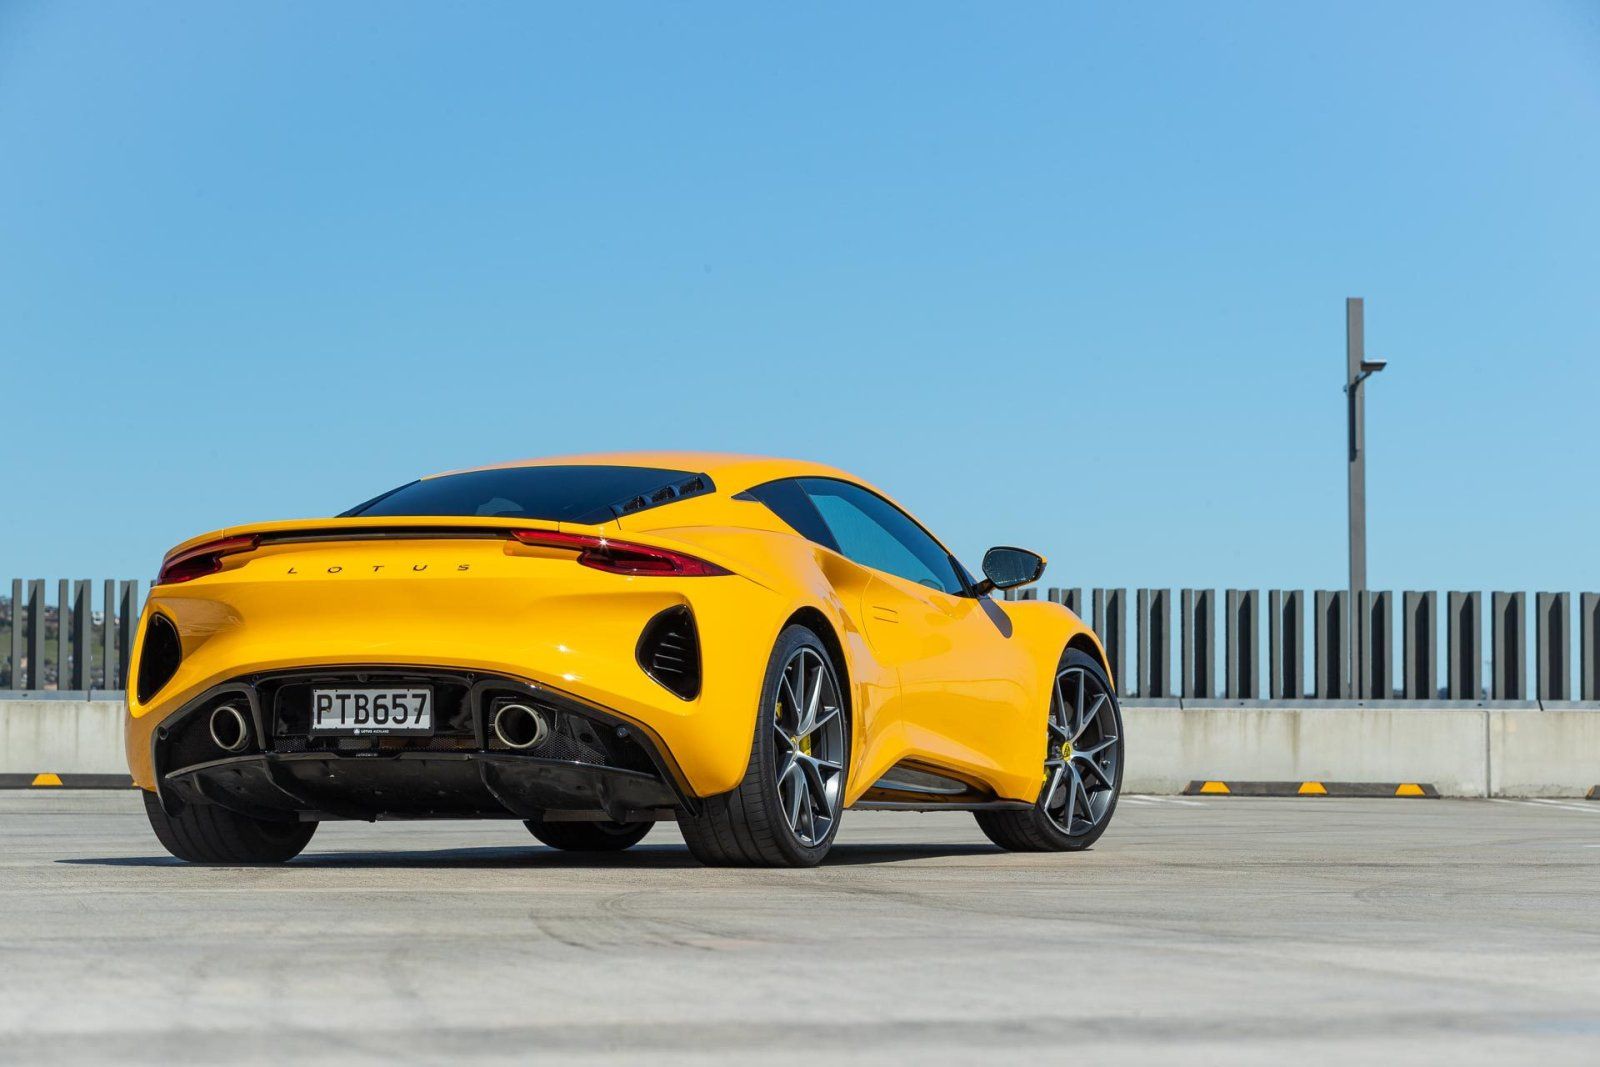 Lotus-Emira-V6-rear-angle.jpg